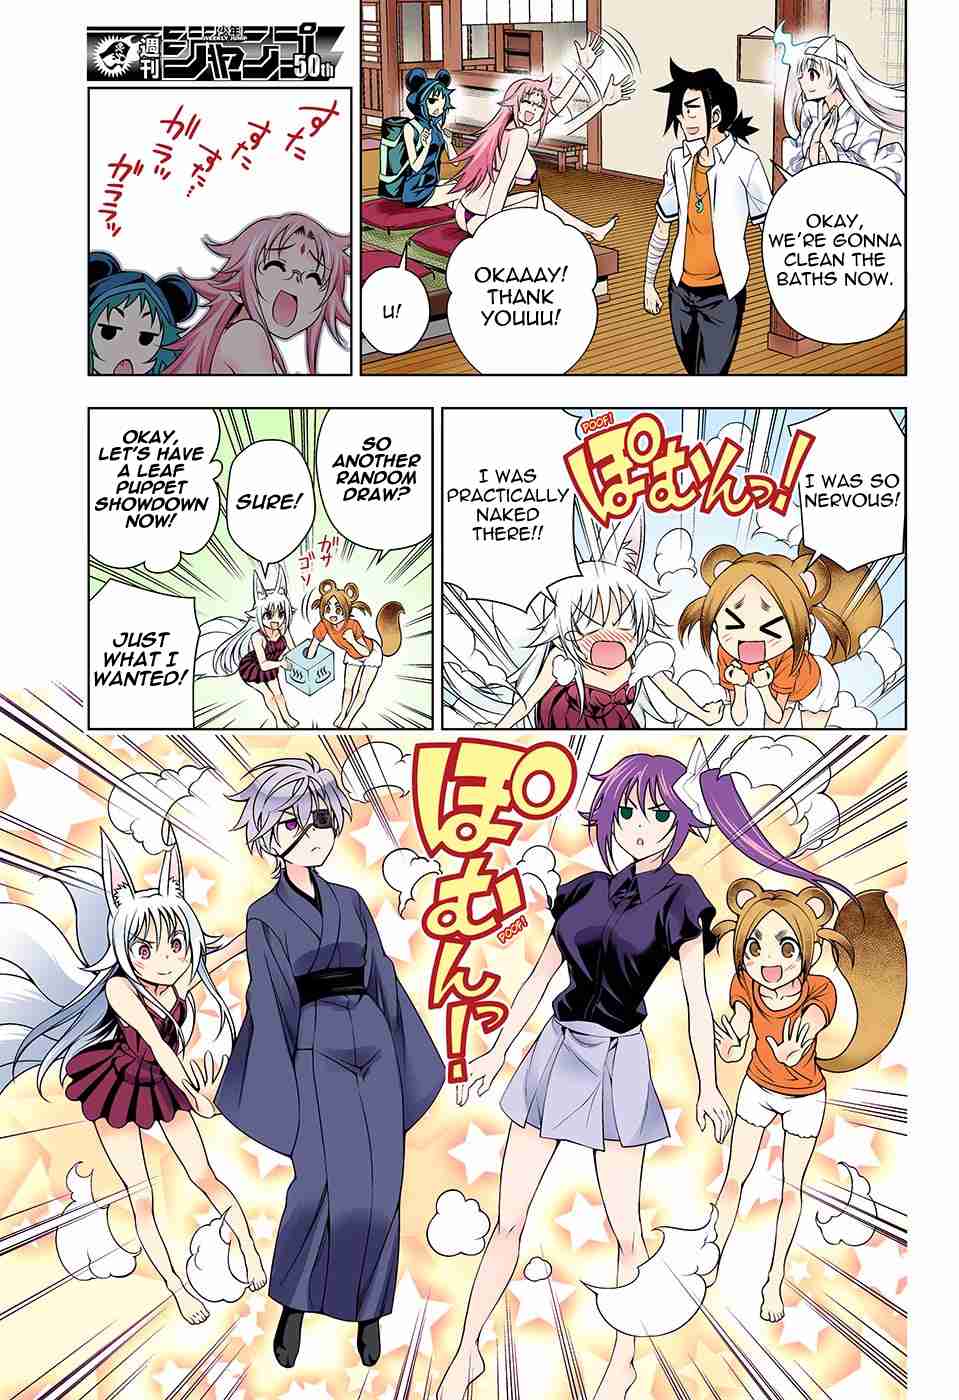 Yuragi sou no Yuuna san Digital Colored Comics Vol. 15 Ch. 130 Koyuzu chan vs Miria chan